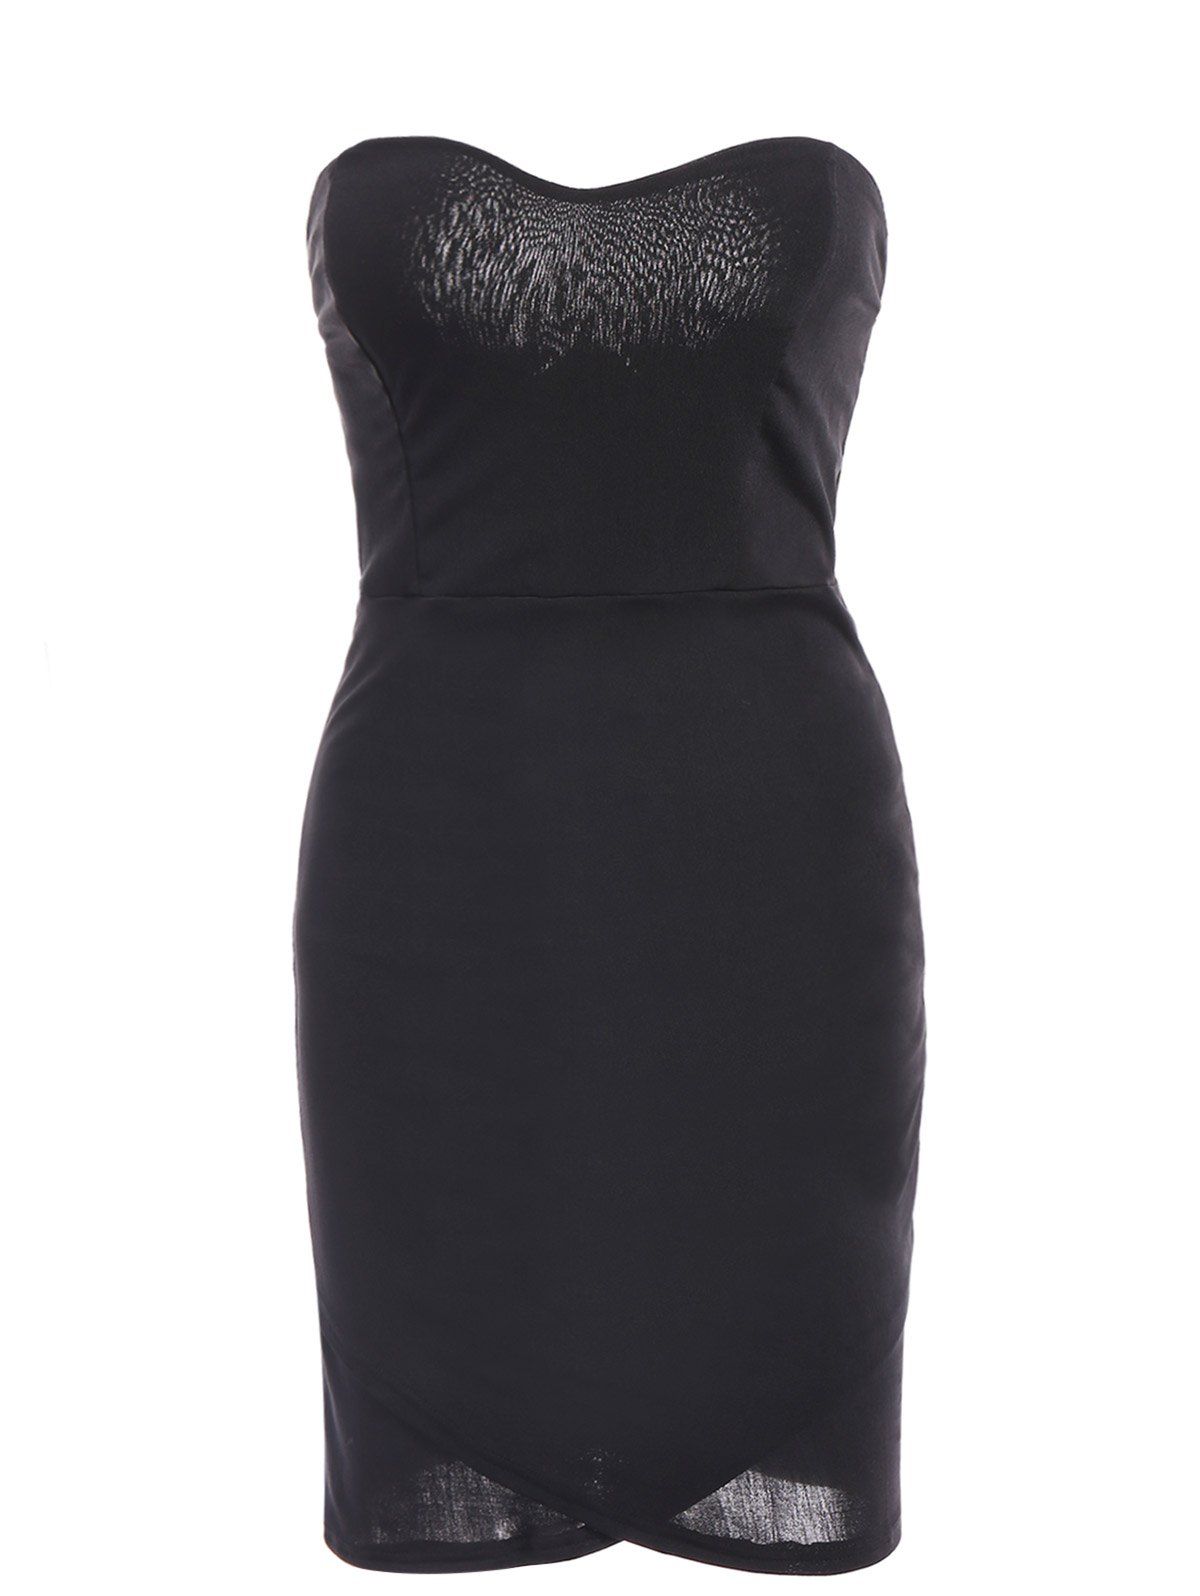 Black L Strapless Bodycon Short Cocktail Dress | Rosegal.com